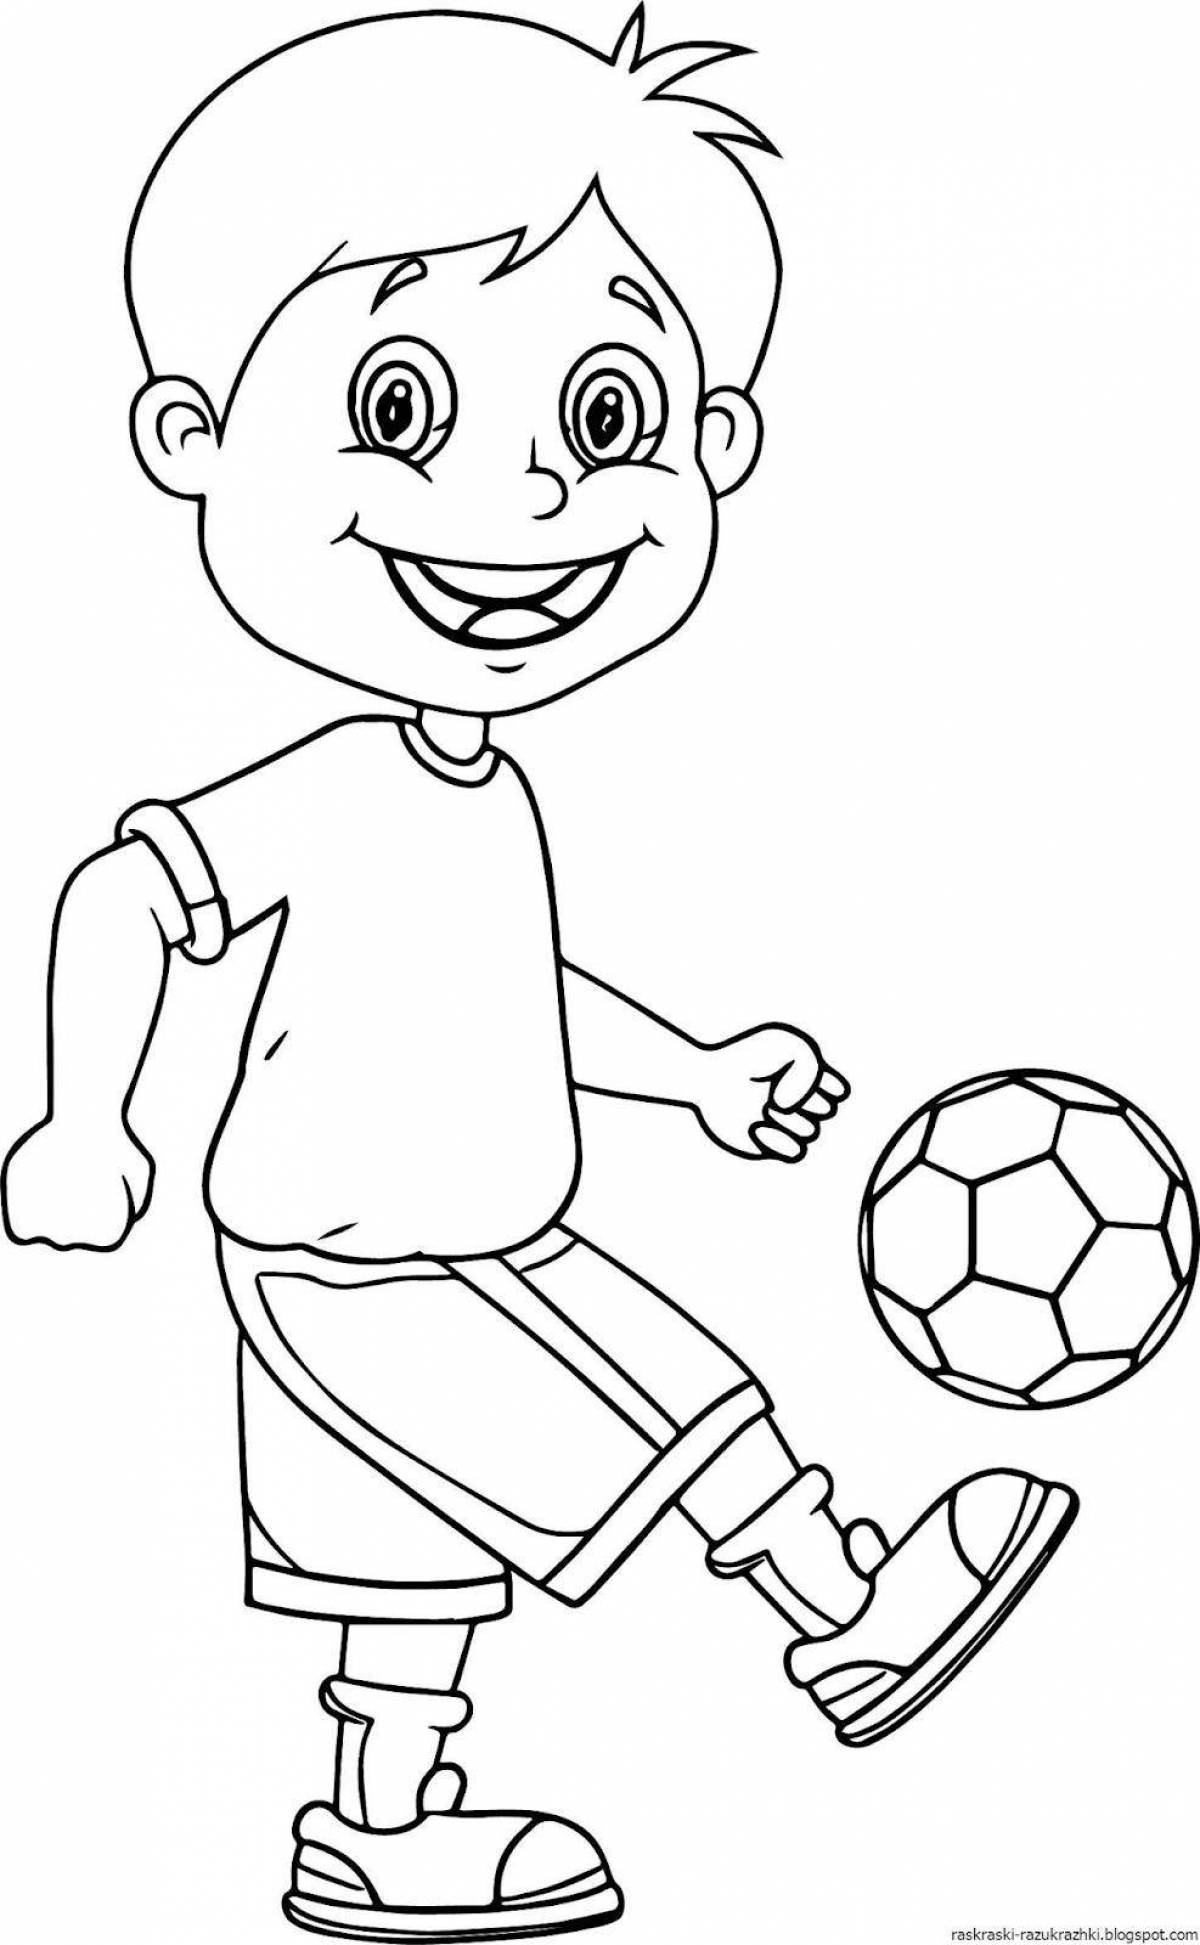 Coloring page of a joyful soccer boy